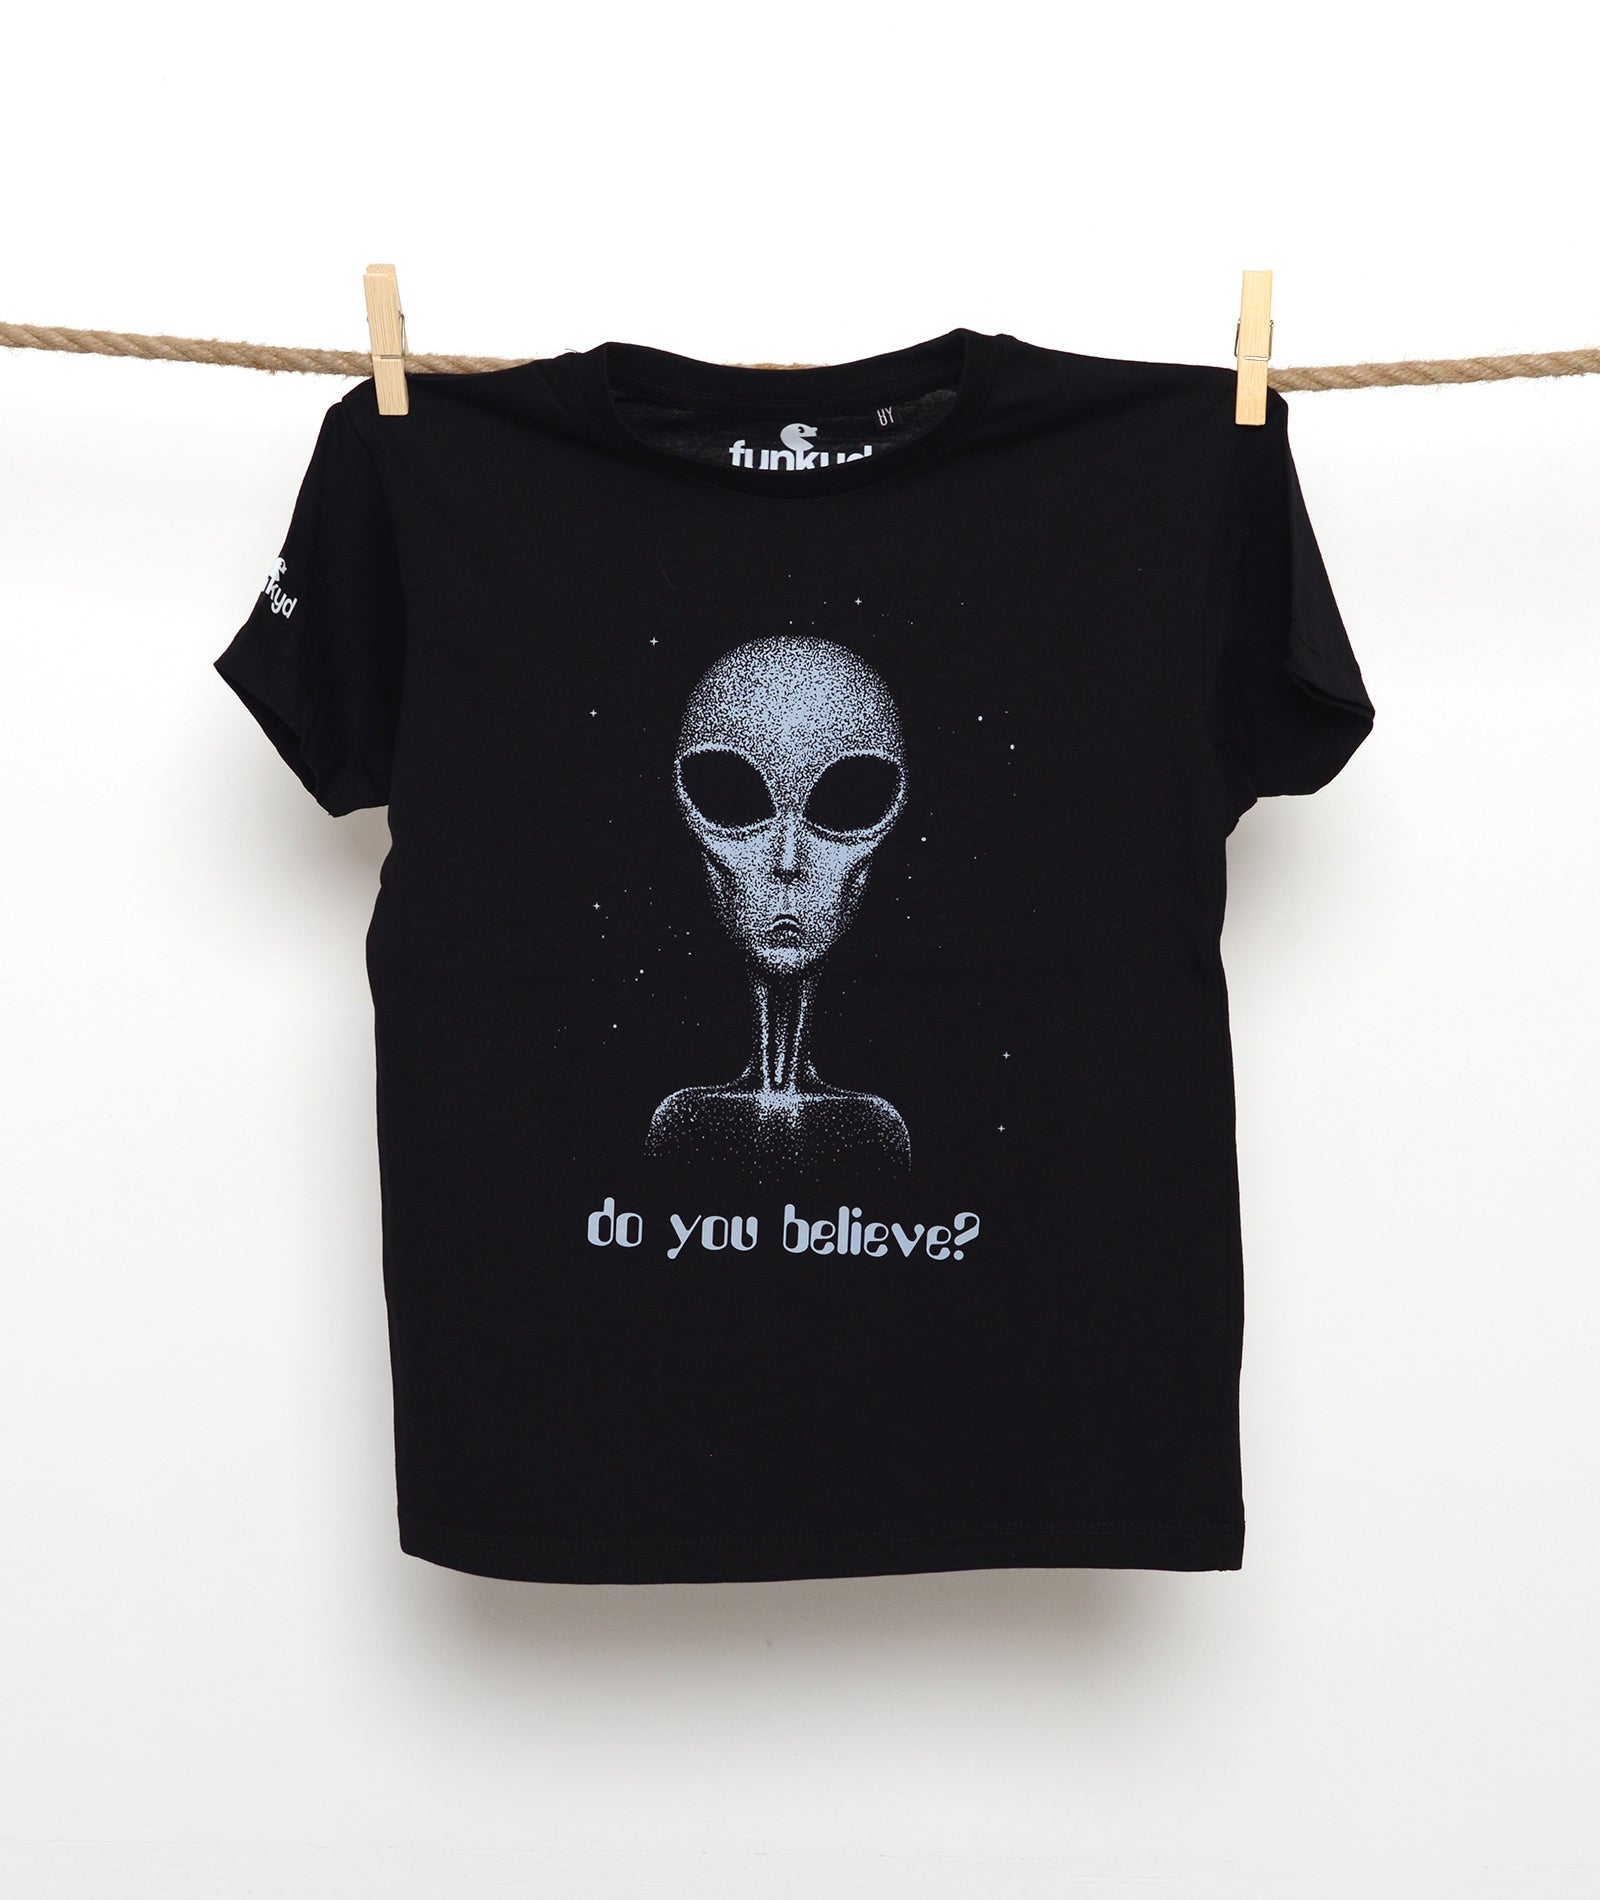 Believe Kids T-Shirt